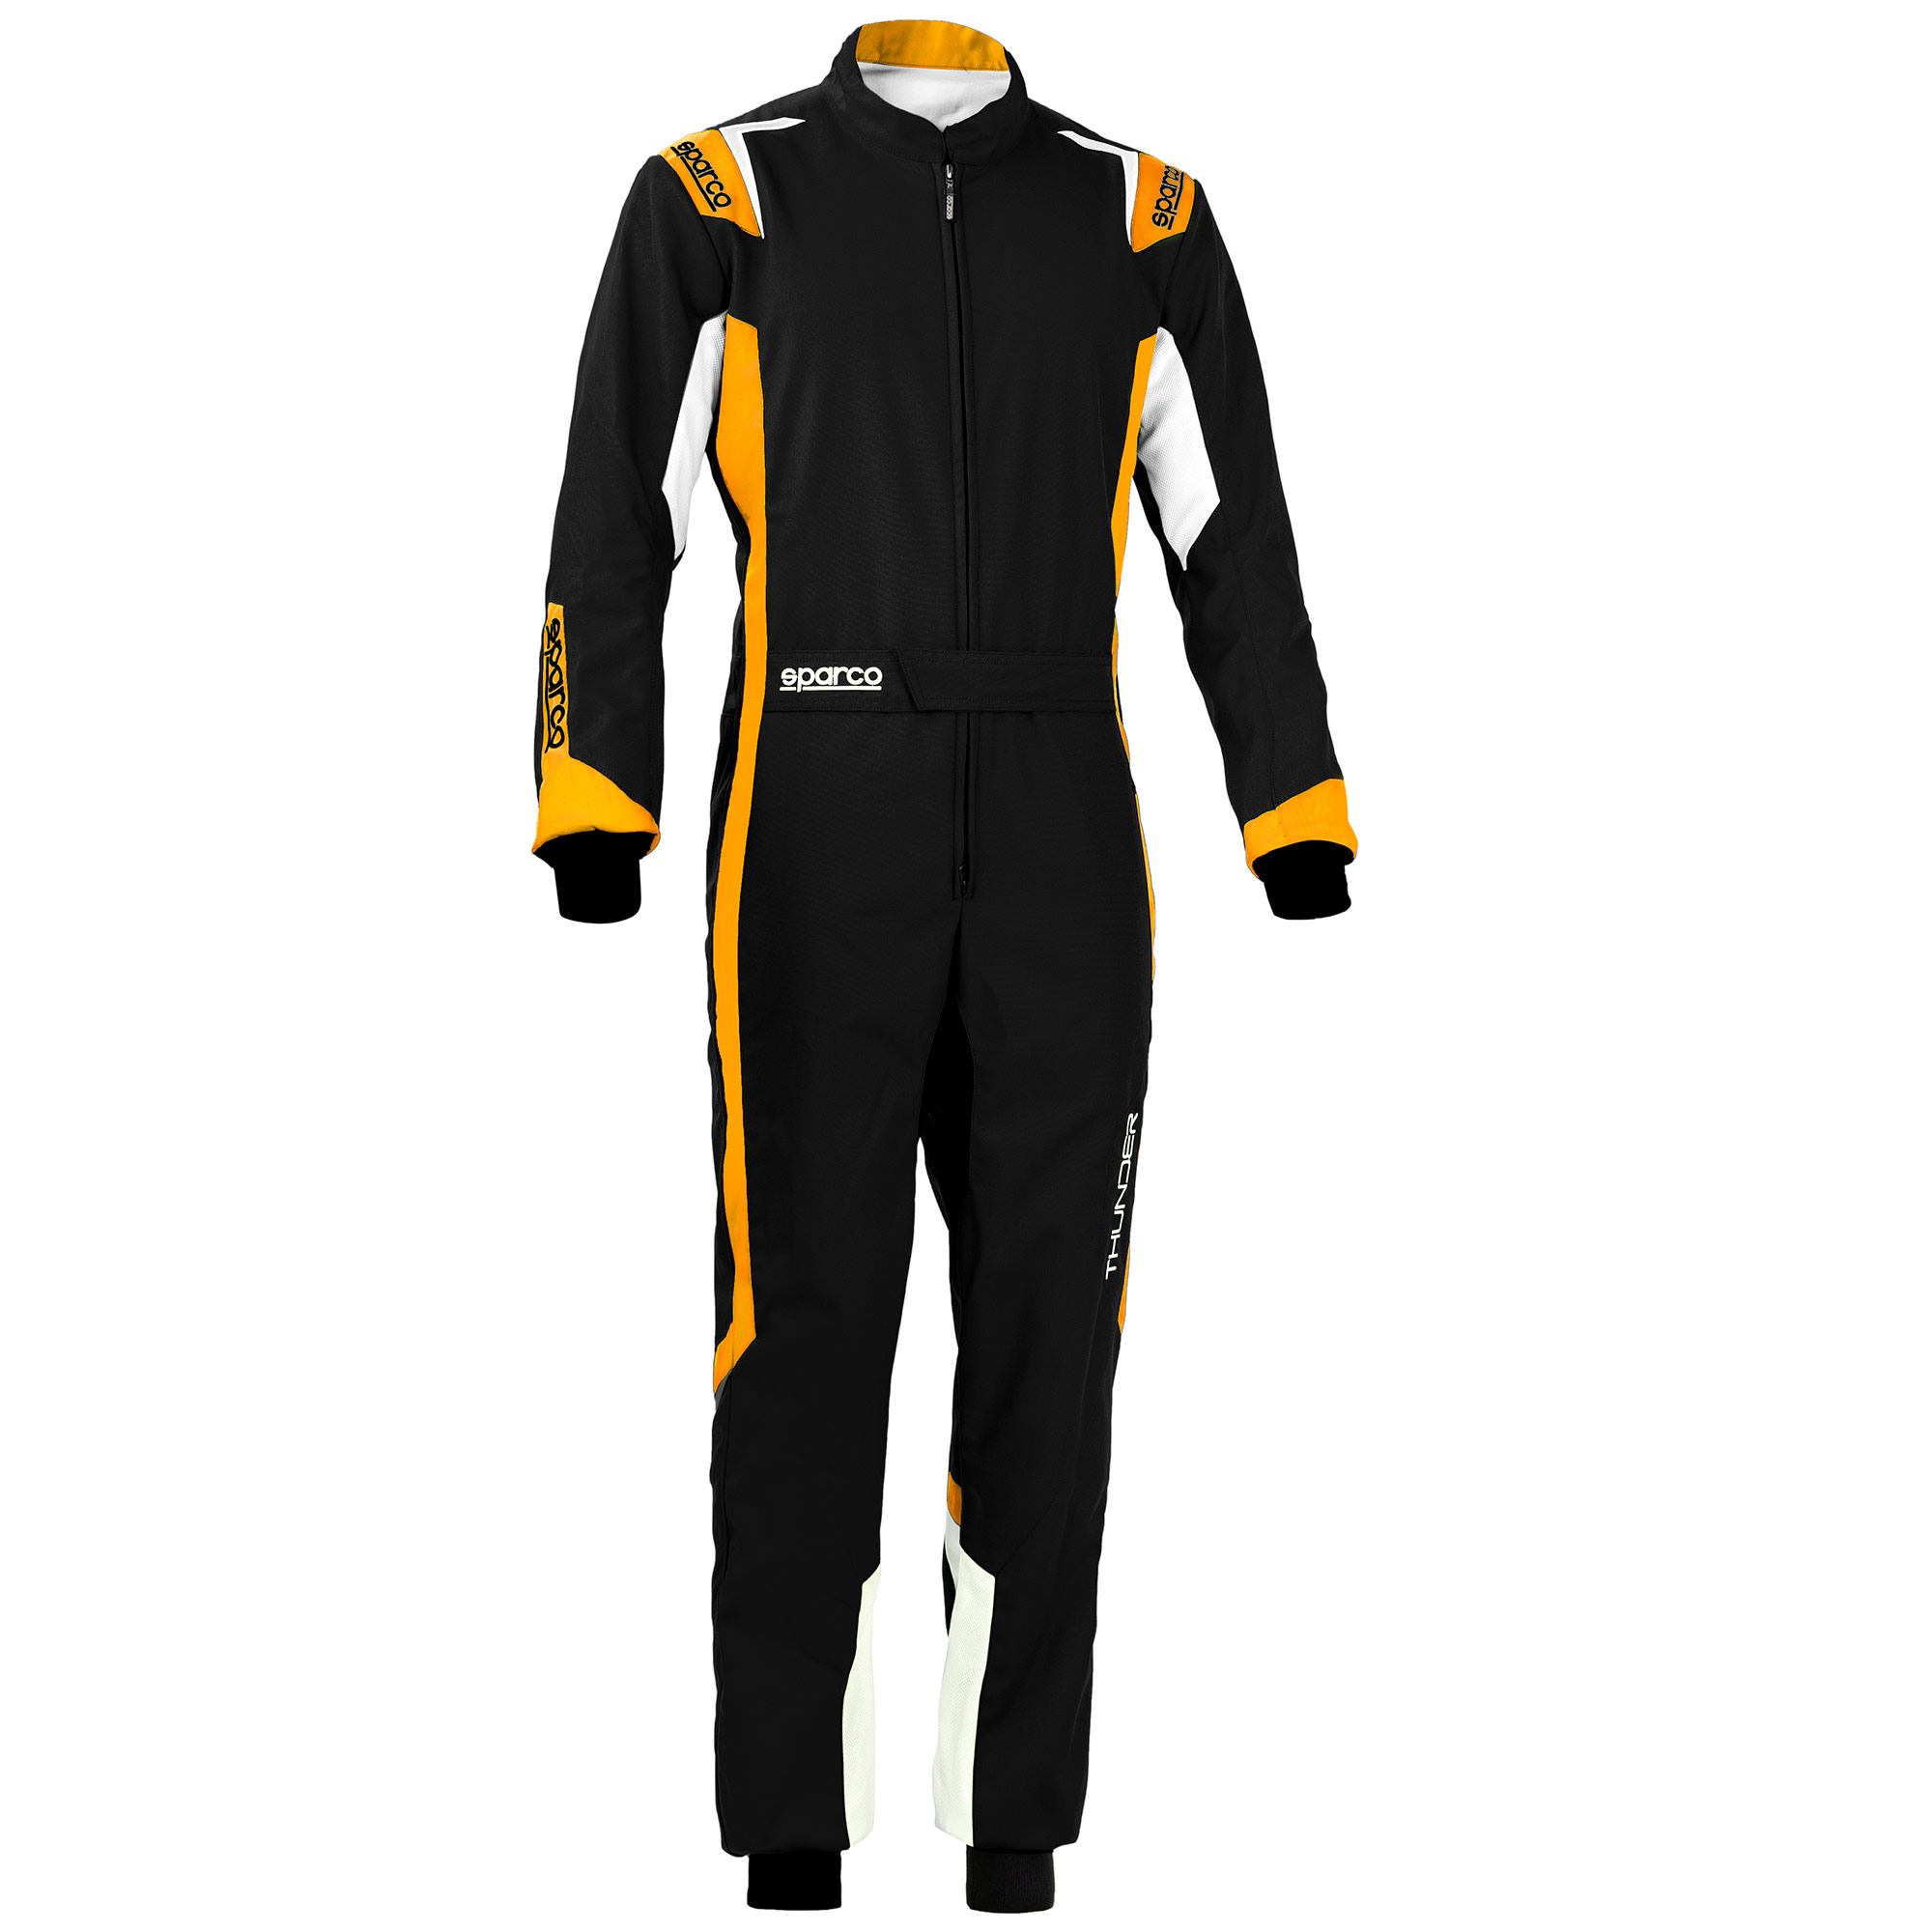 Sodi Kart race suit CIK/FIA level 2 2013 style free balaclava and gloves 